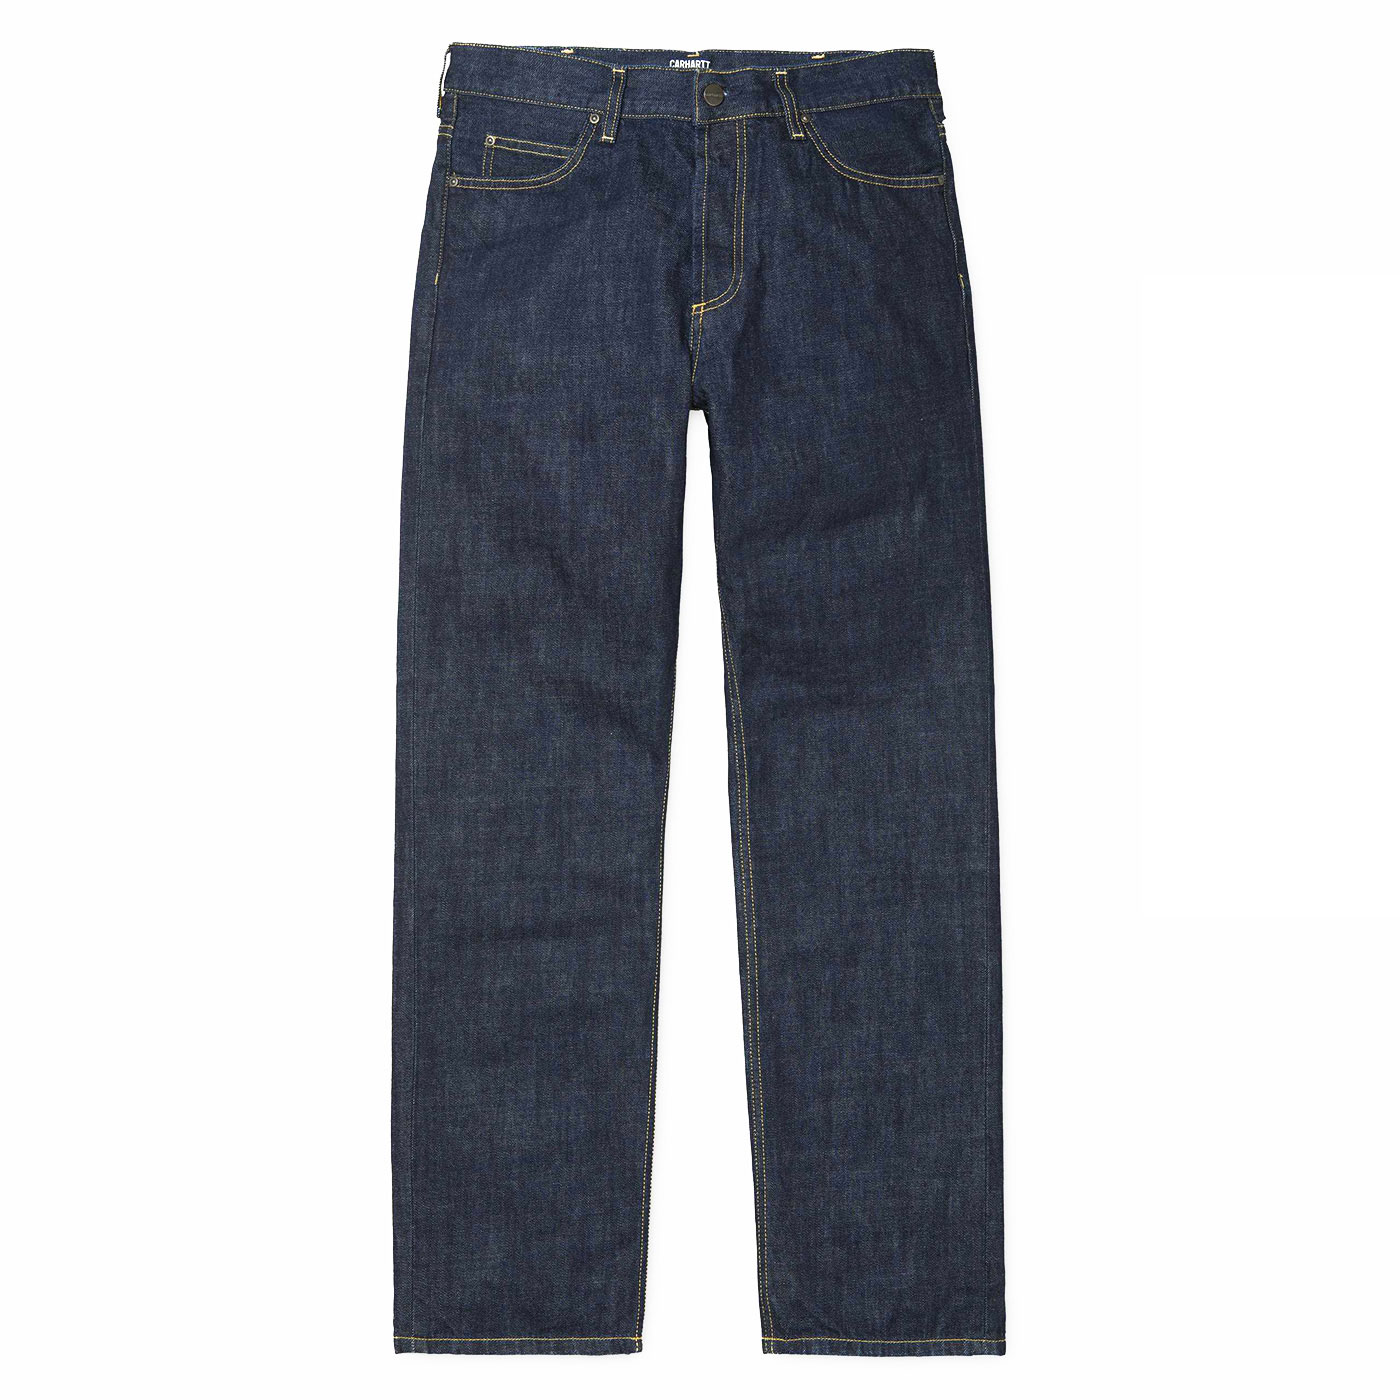 Pants CARHARTT Marlow Pant Blue for Man | I0230290102 | XTREME.PT